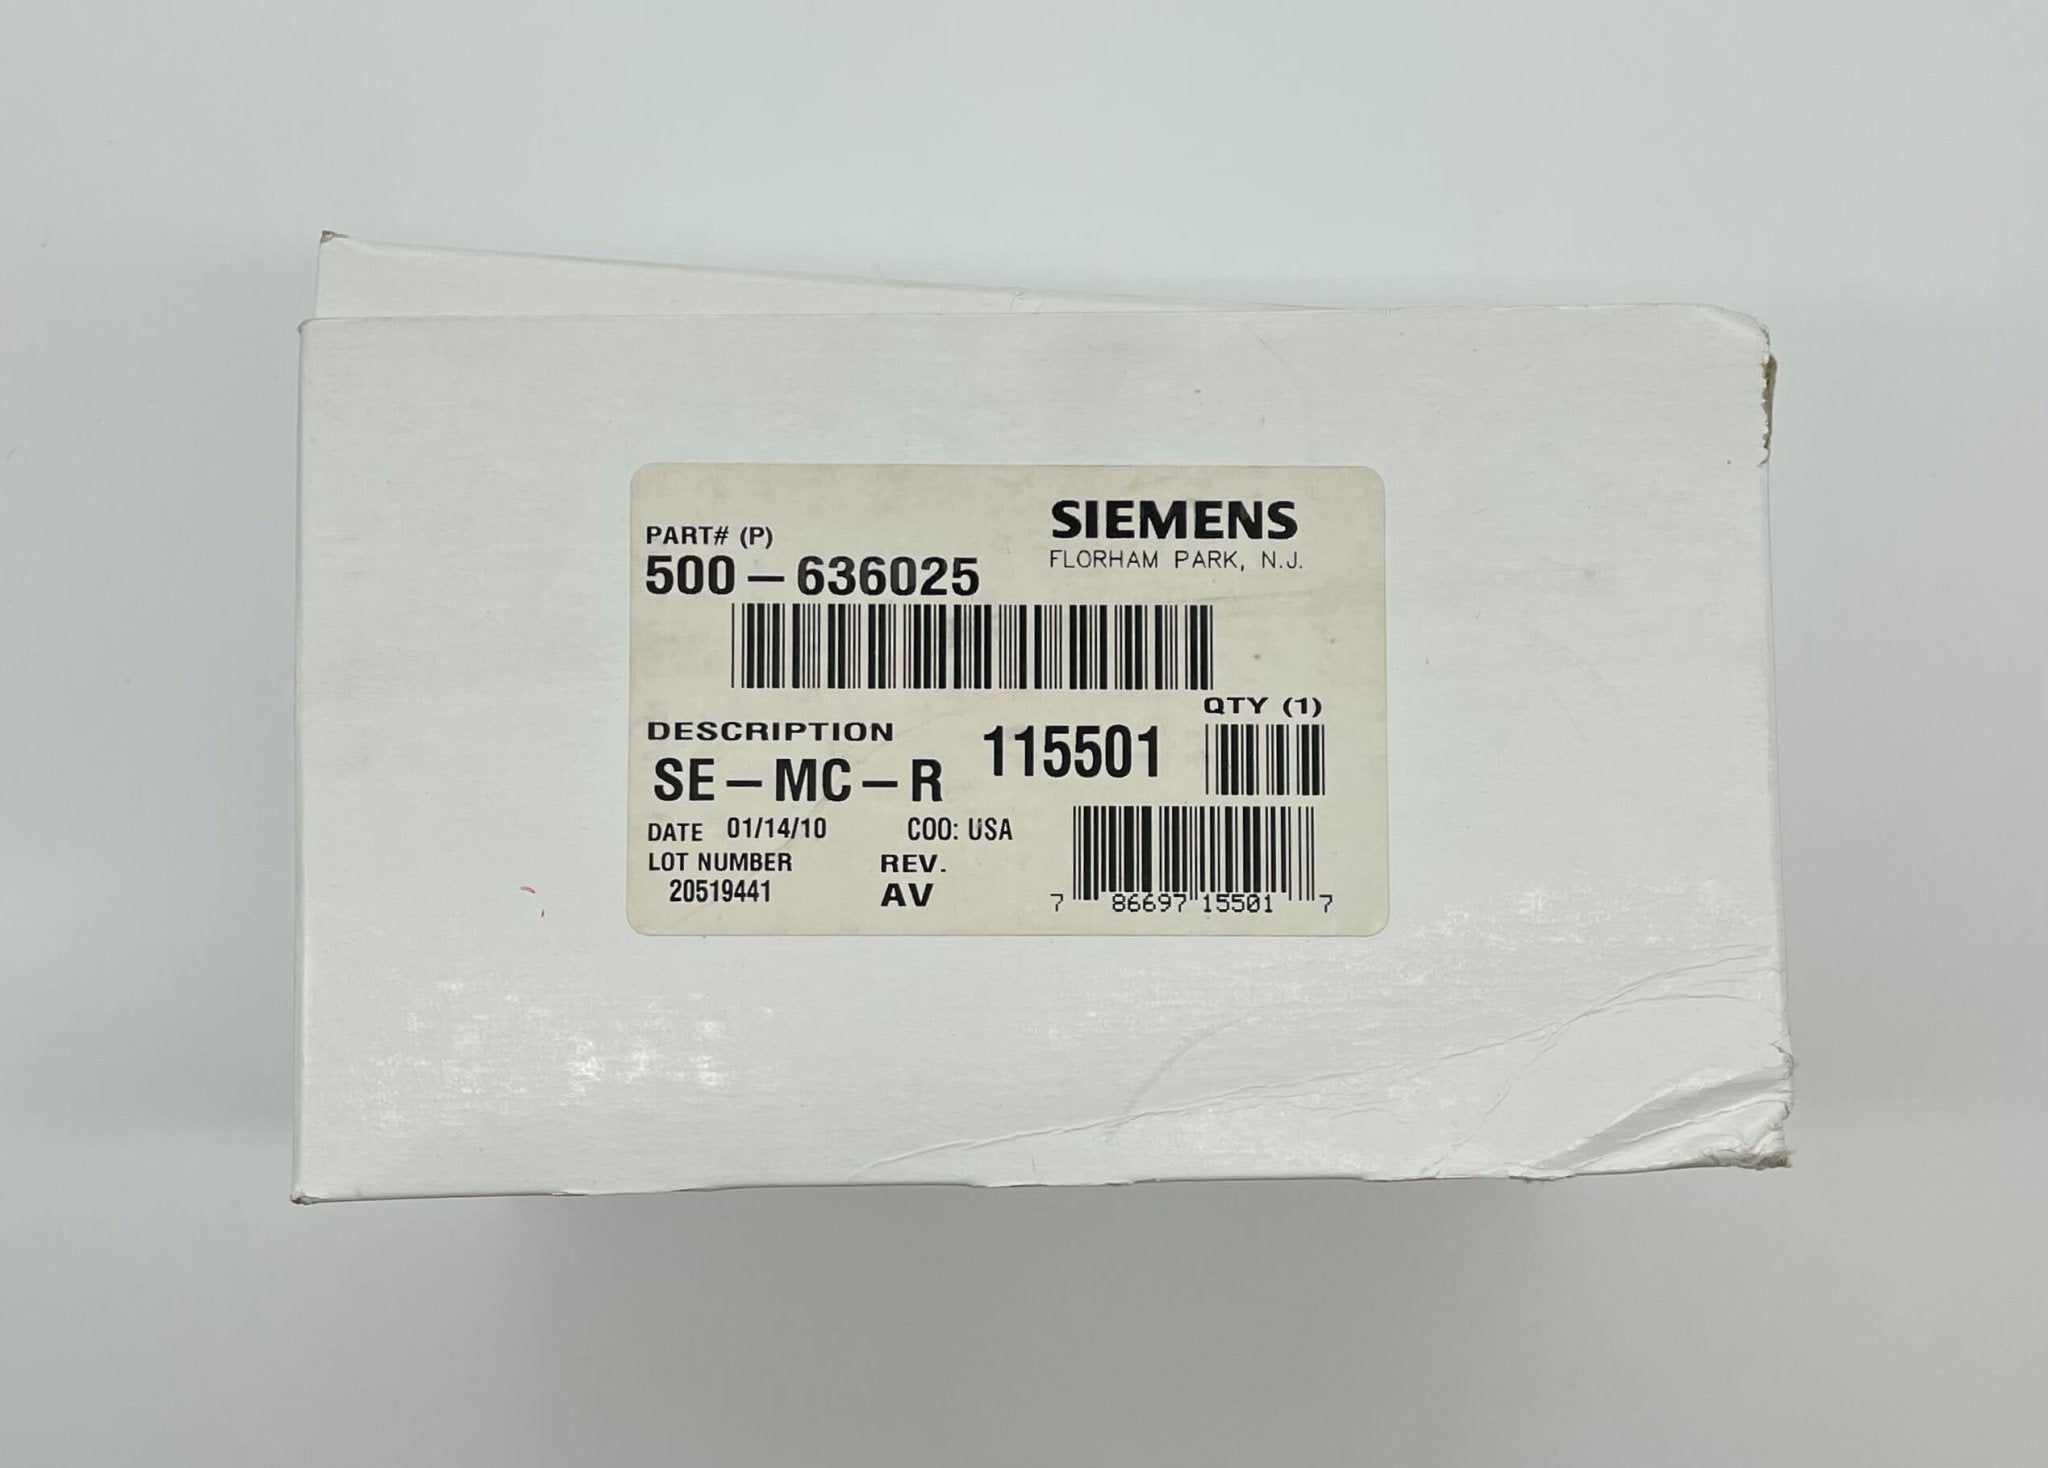 Siemens SE-MC-R Speaker Strobe Relay - The Fire Alarm Supplier